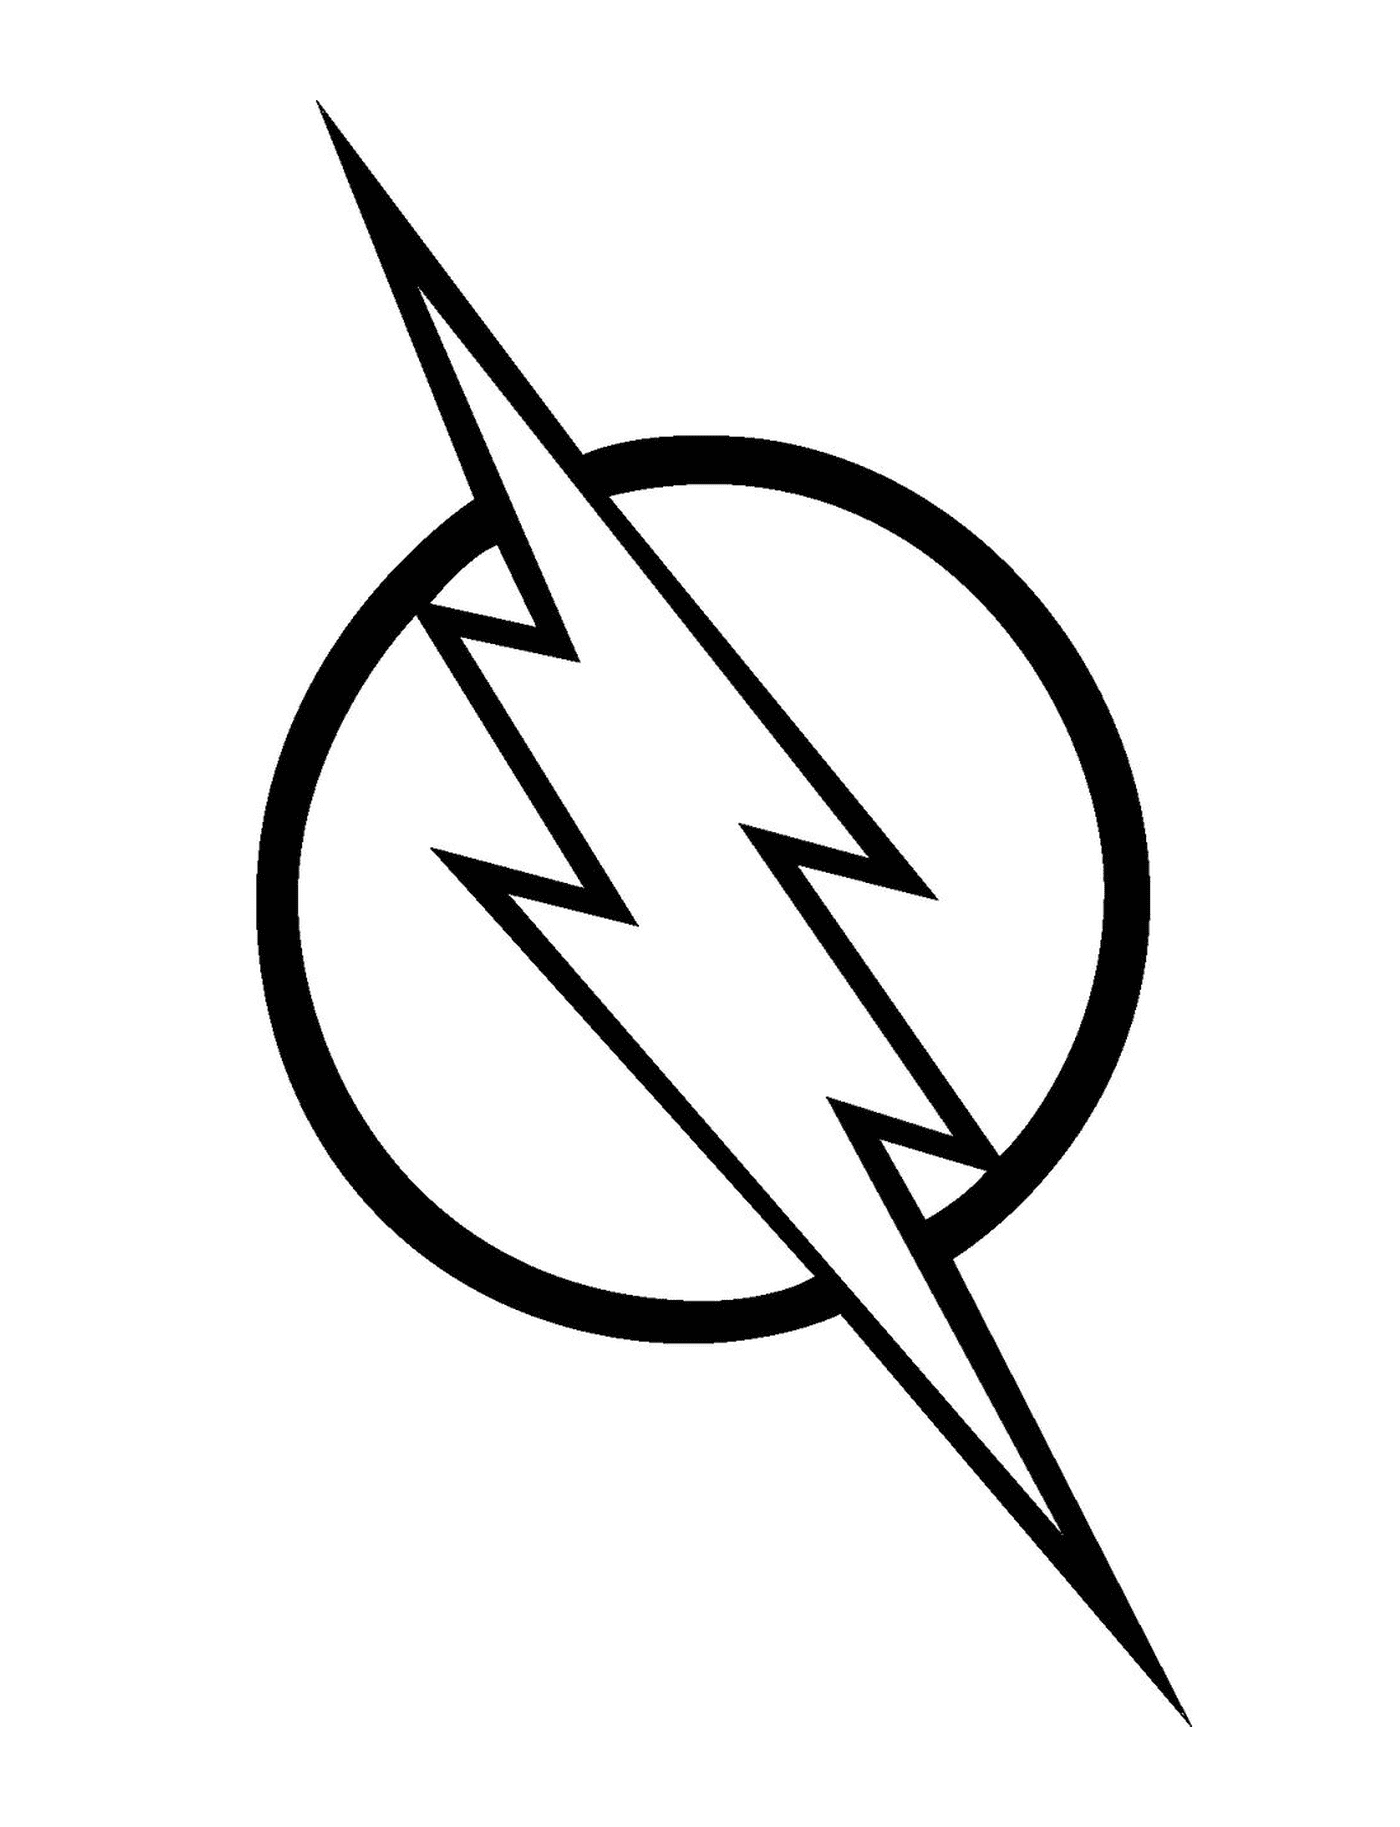  O logotipo do super-herói Flash 